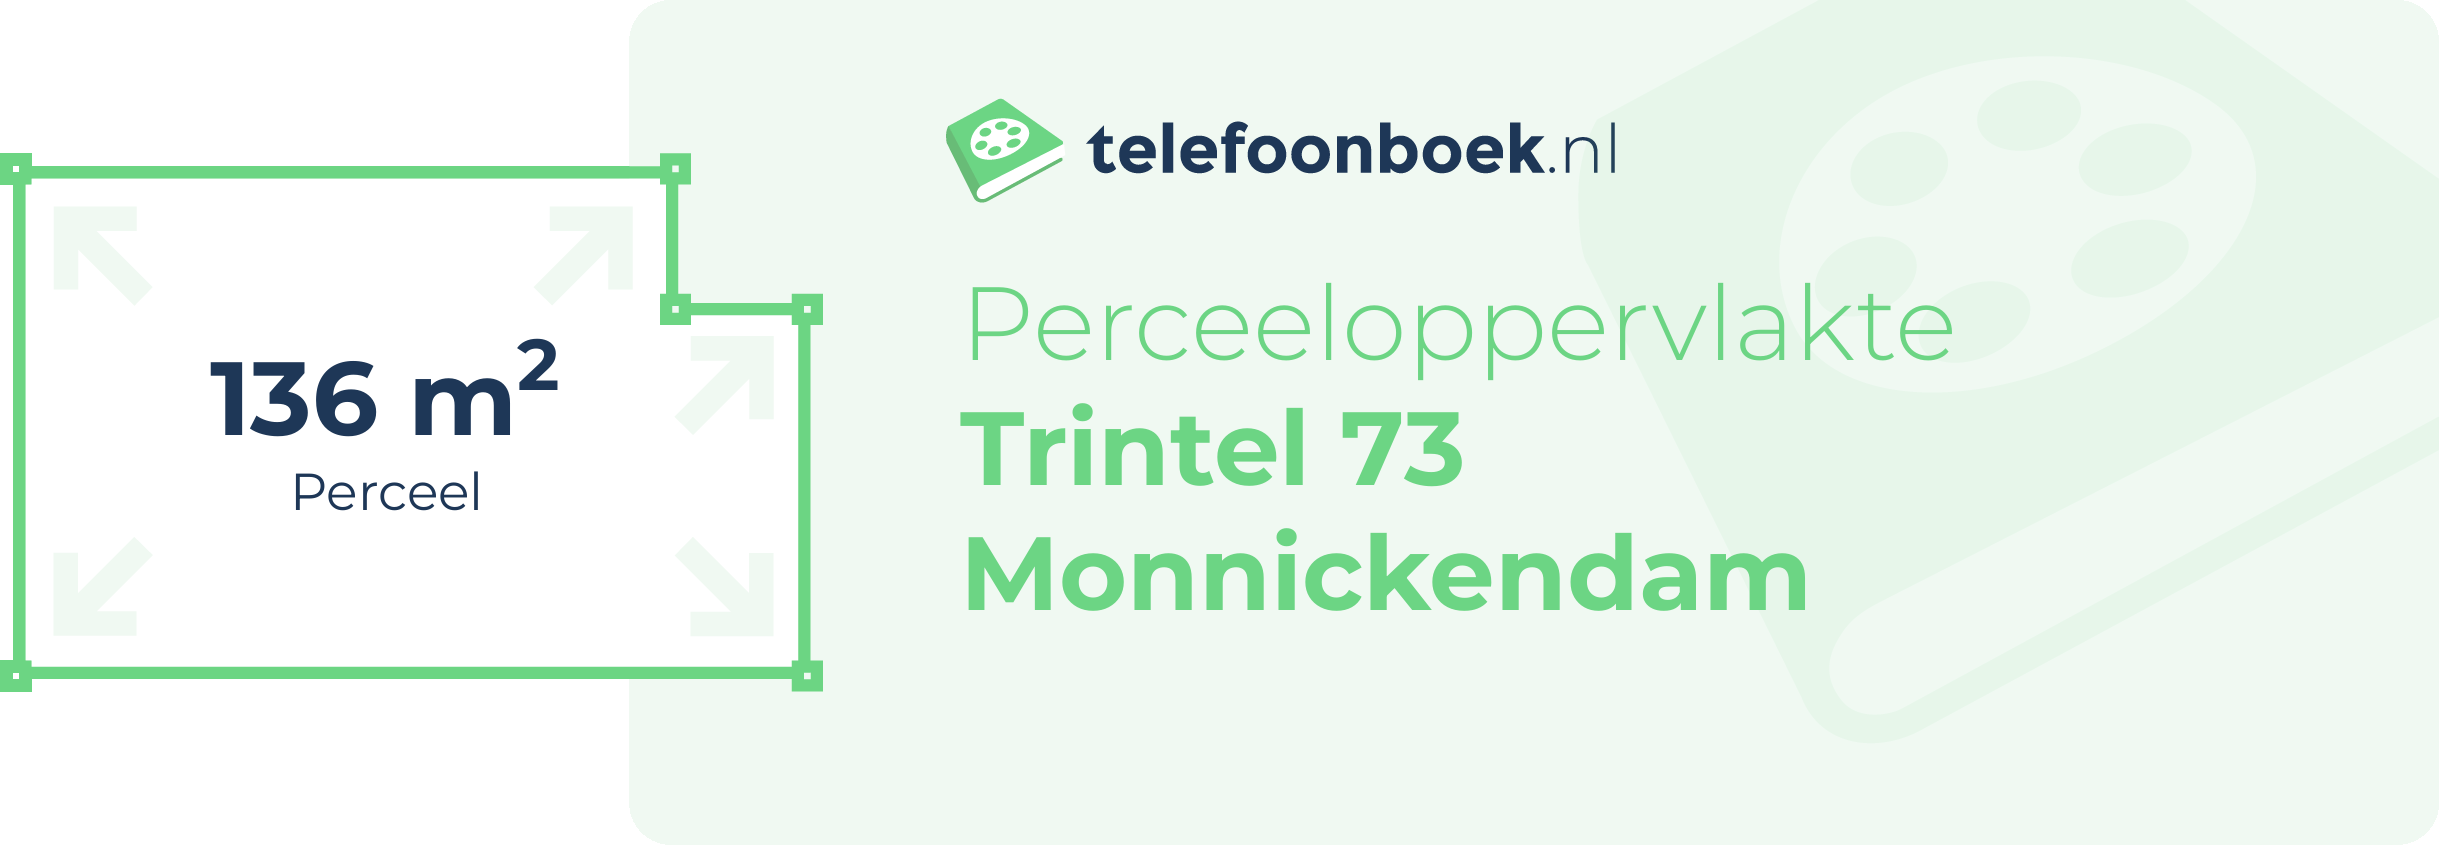 Perceeloppervlakte Trintel 73 Monnickendam